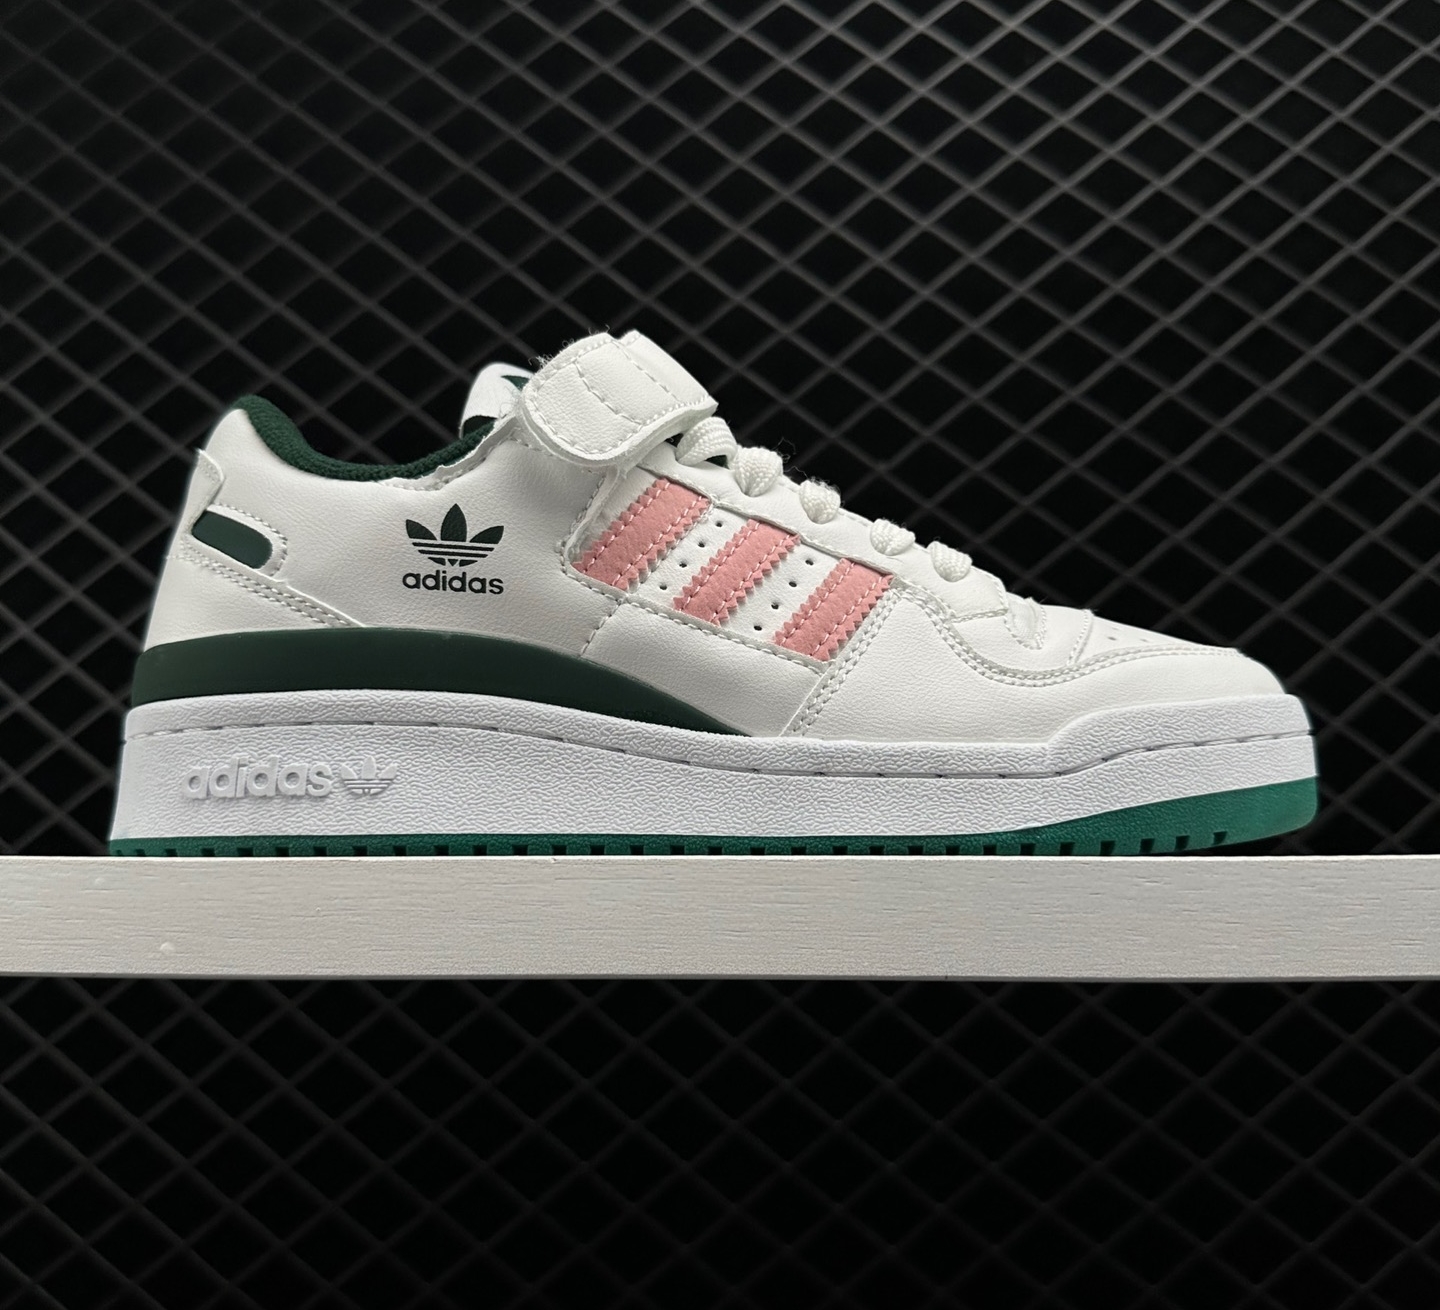 Adidas Originals Forum Low 84 White Green Pink Shoes - H01671